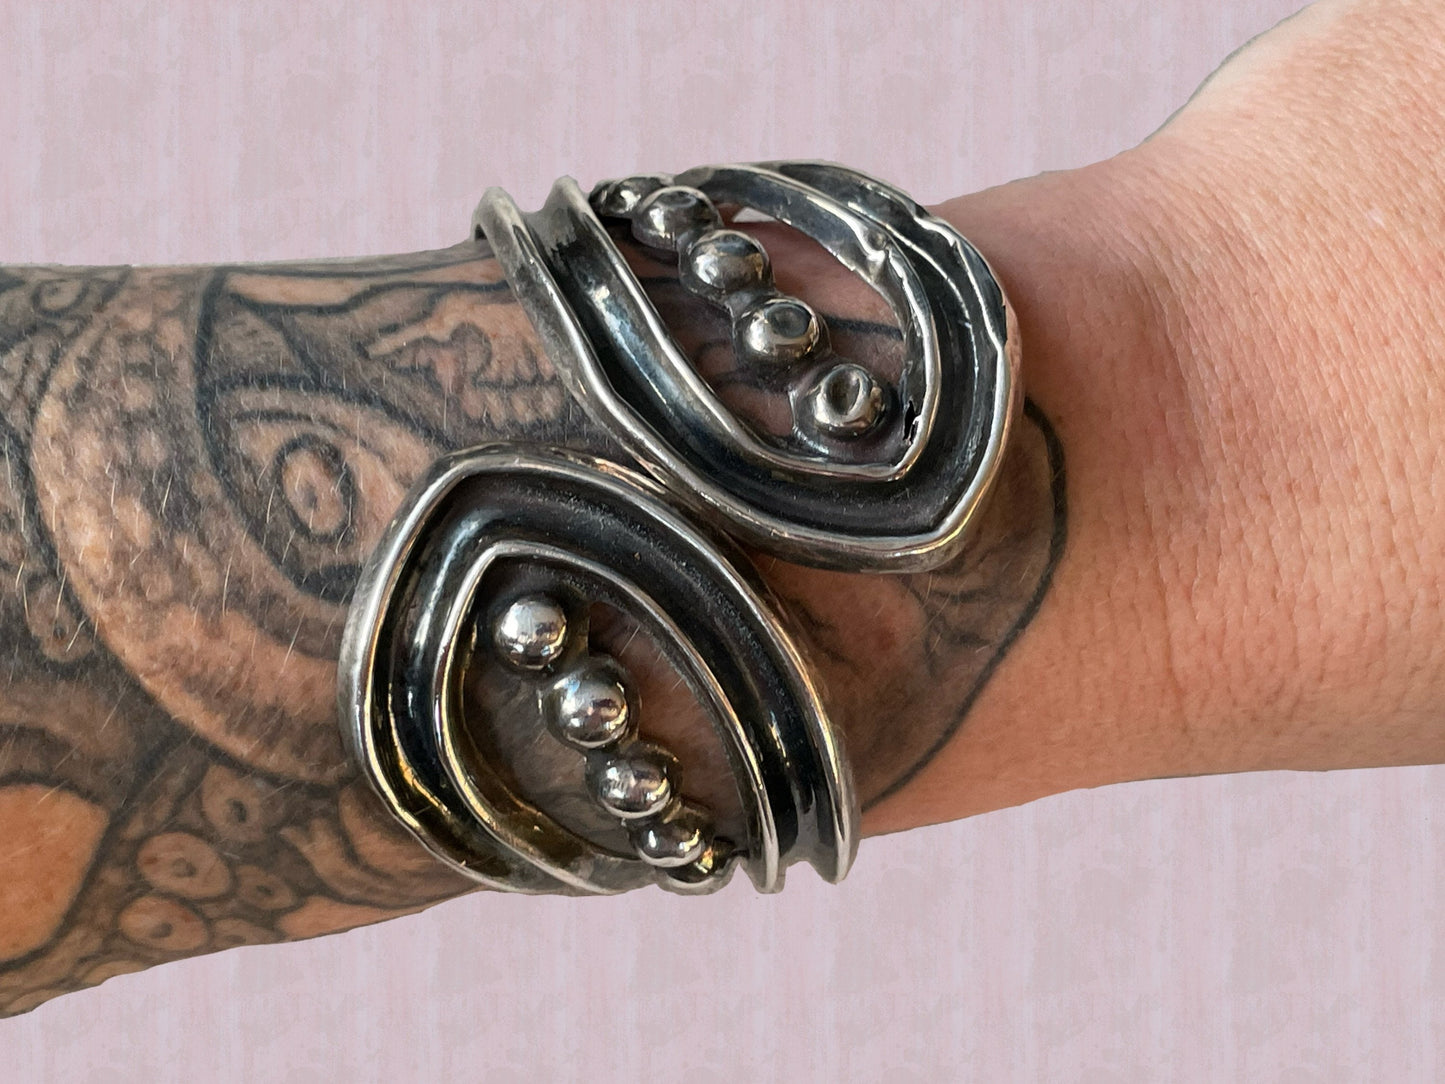 Vintage Sterling Silver Mexican Repoussé Hinged Clamper Bangle Bracelet